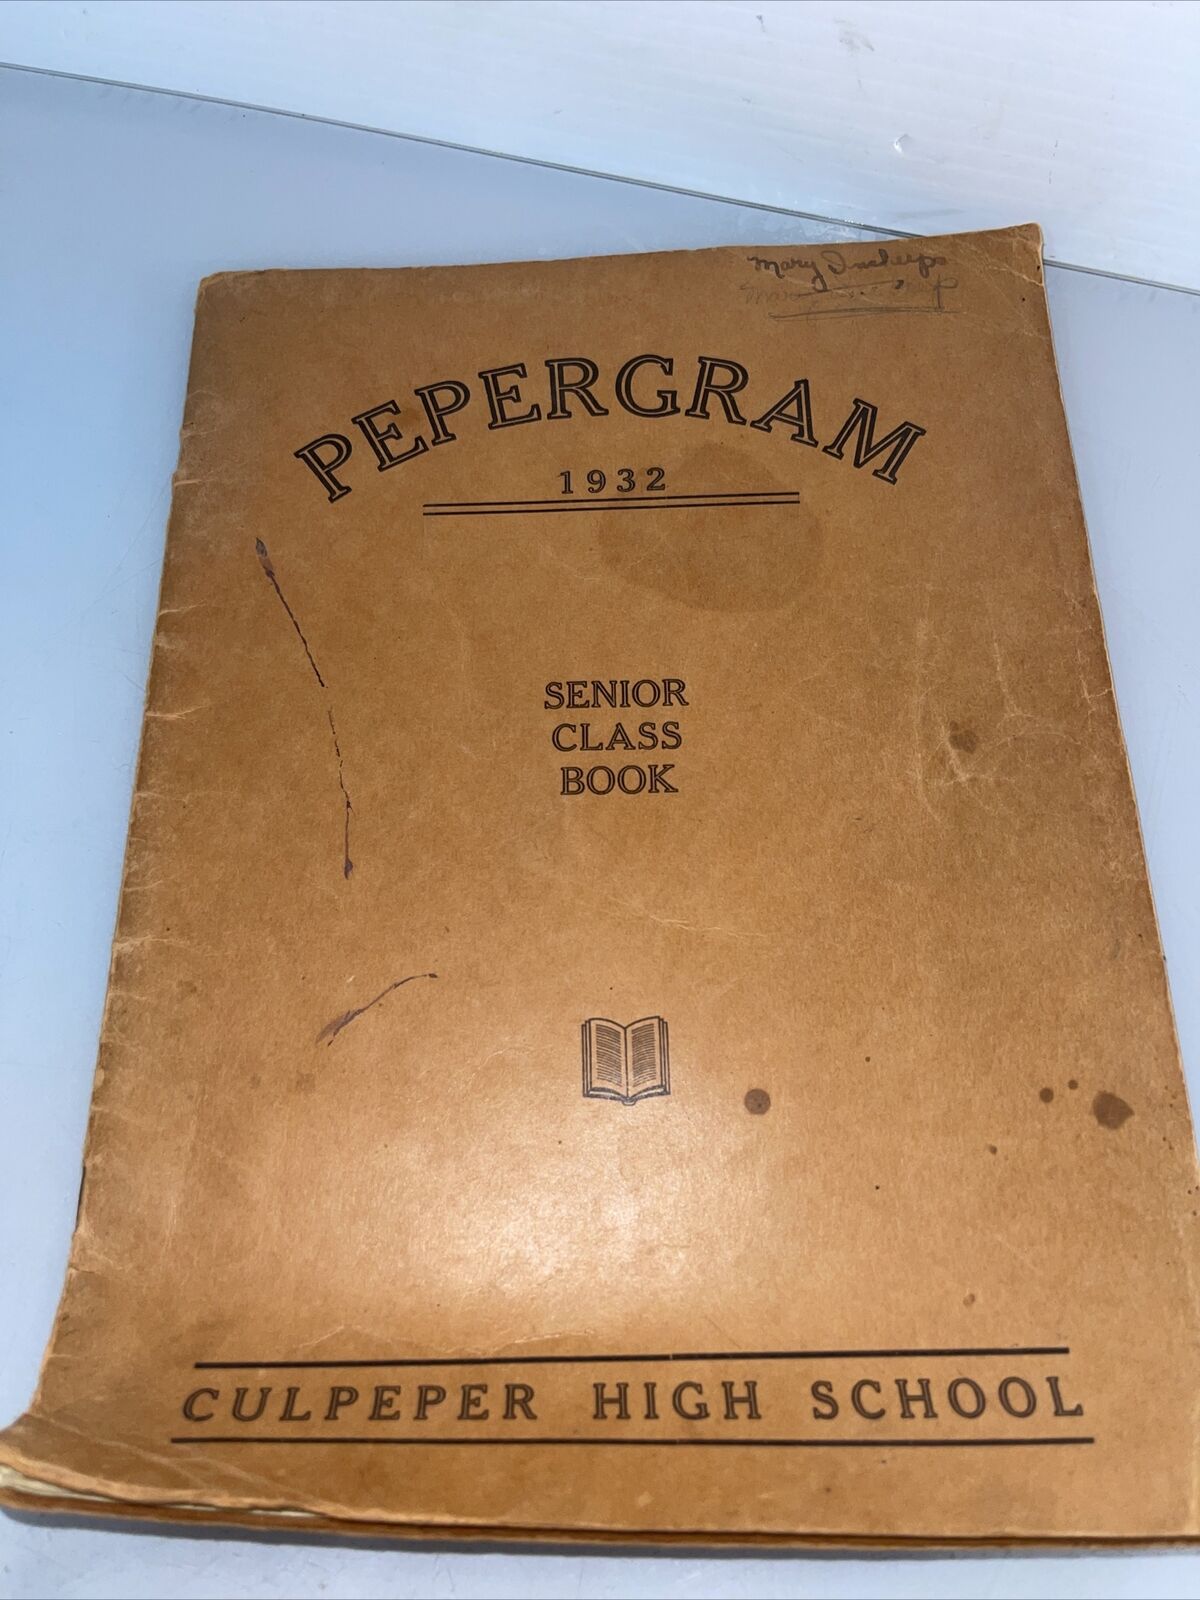 CLASS OF 1932 CULPEPER HIGH SCHOOL SENIOR CLASS BOOK PEPERGRAM